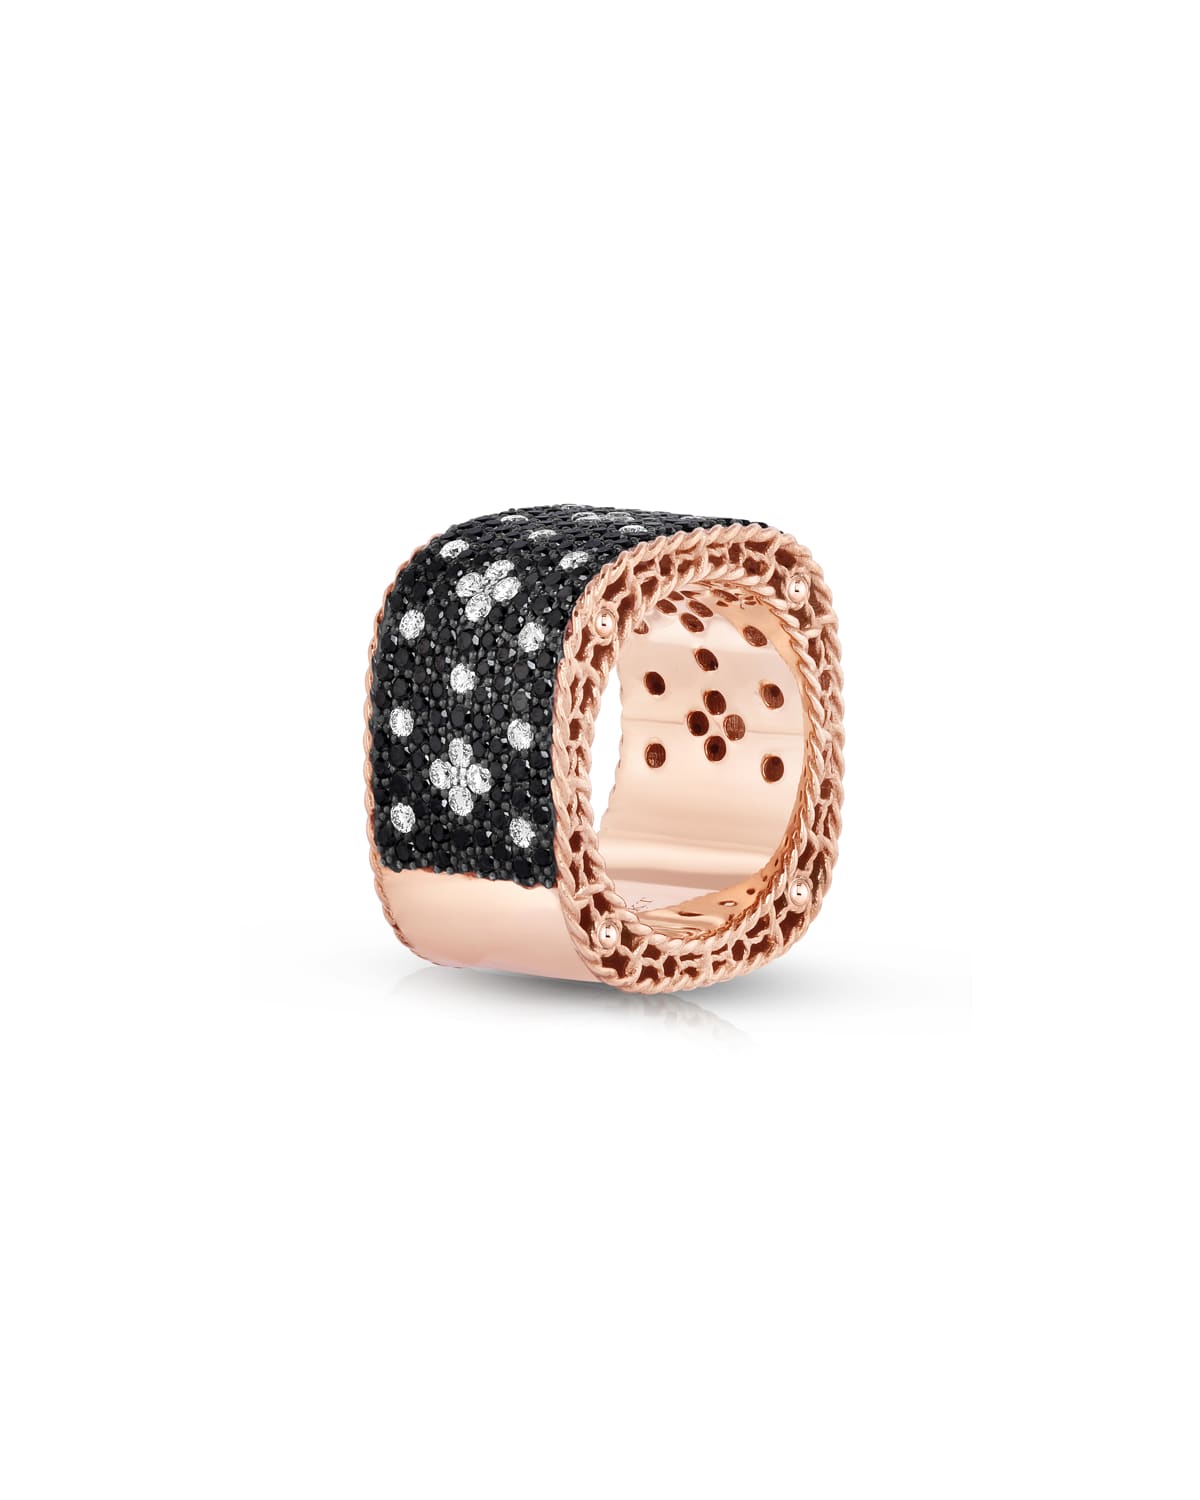 18k Rose Gold Wide Venetian Princess Ring with Black Diamonds, Size 6.5